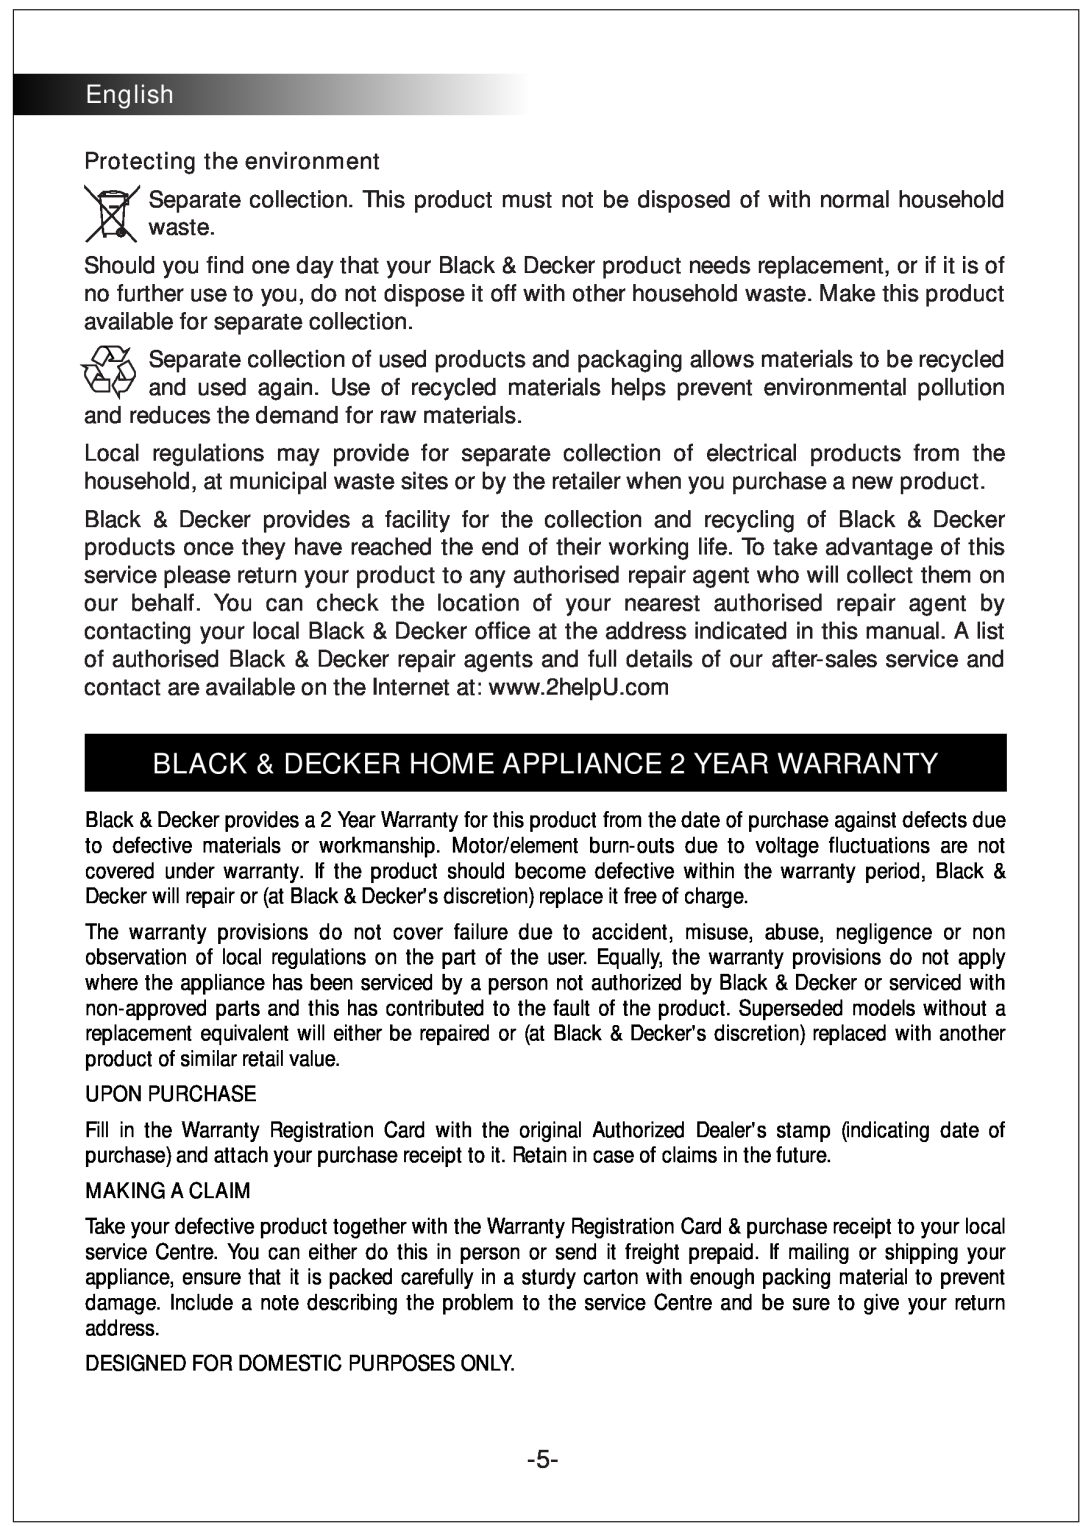 Black & Decker LCJ82 manual Protecting the environment, BLACK & DECKER HOME APPLIANCE 2 YEAR WARRANTY, English 